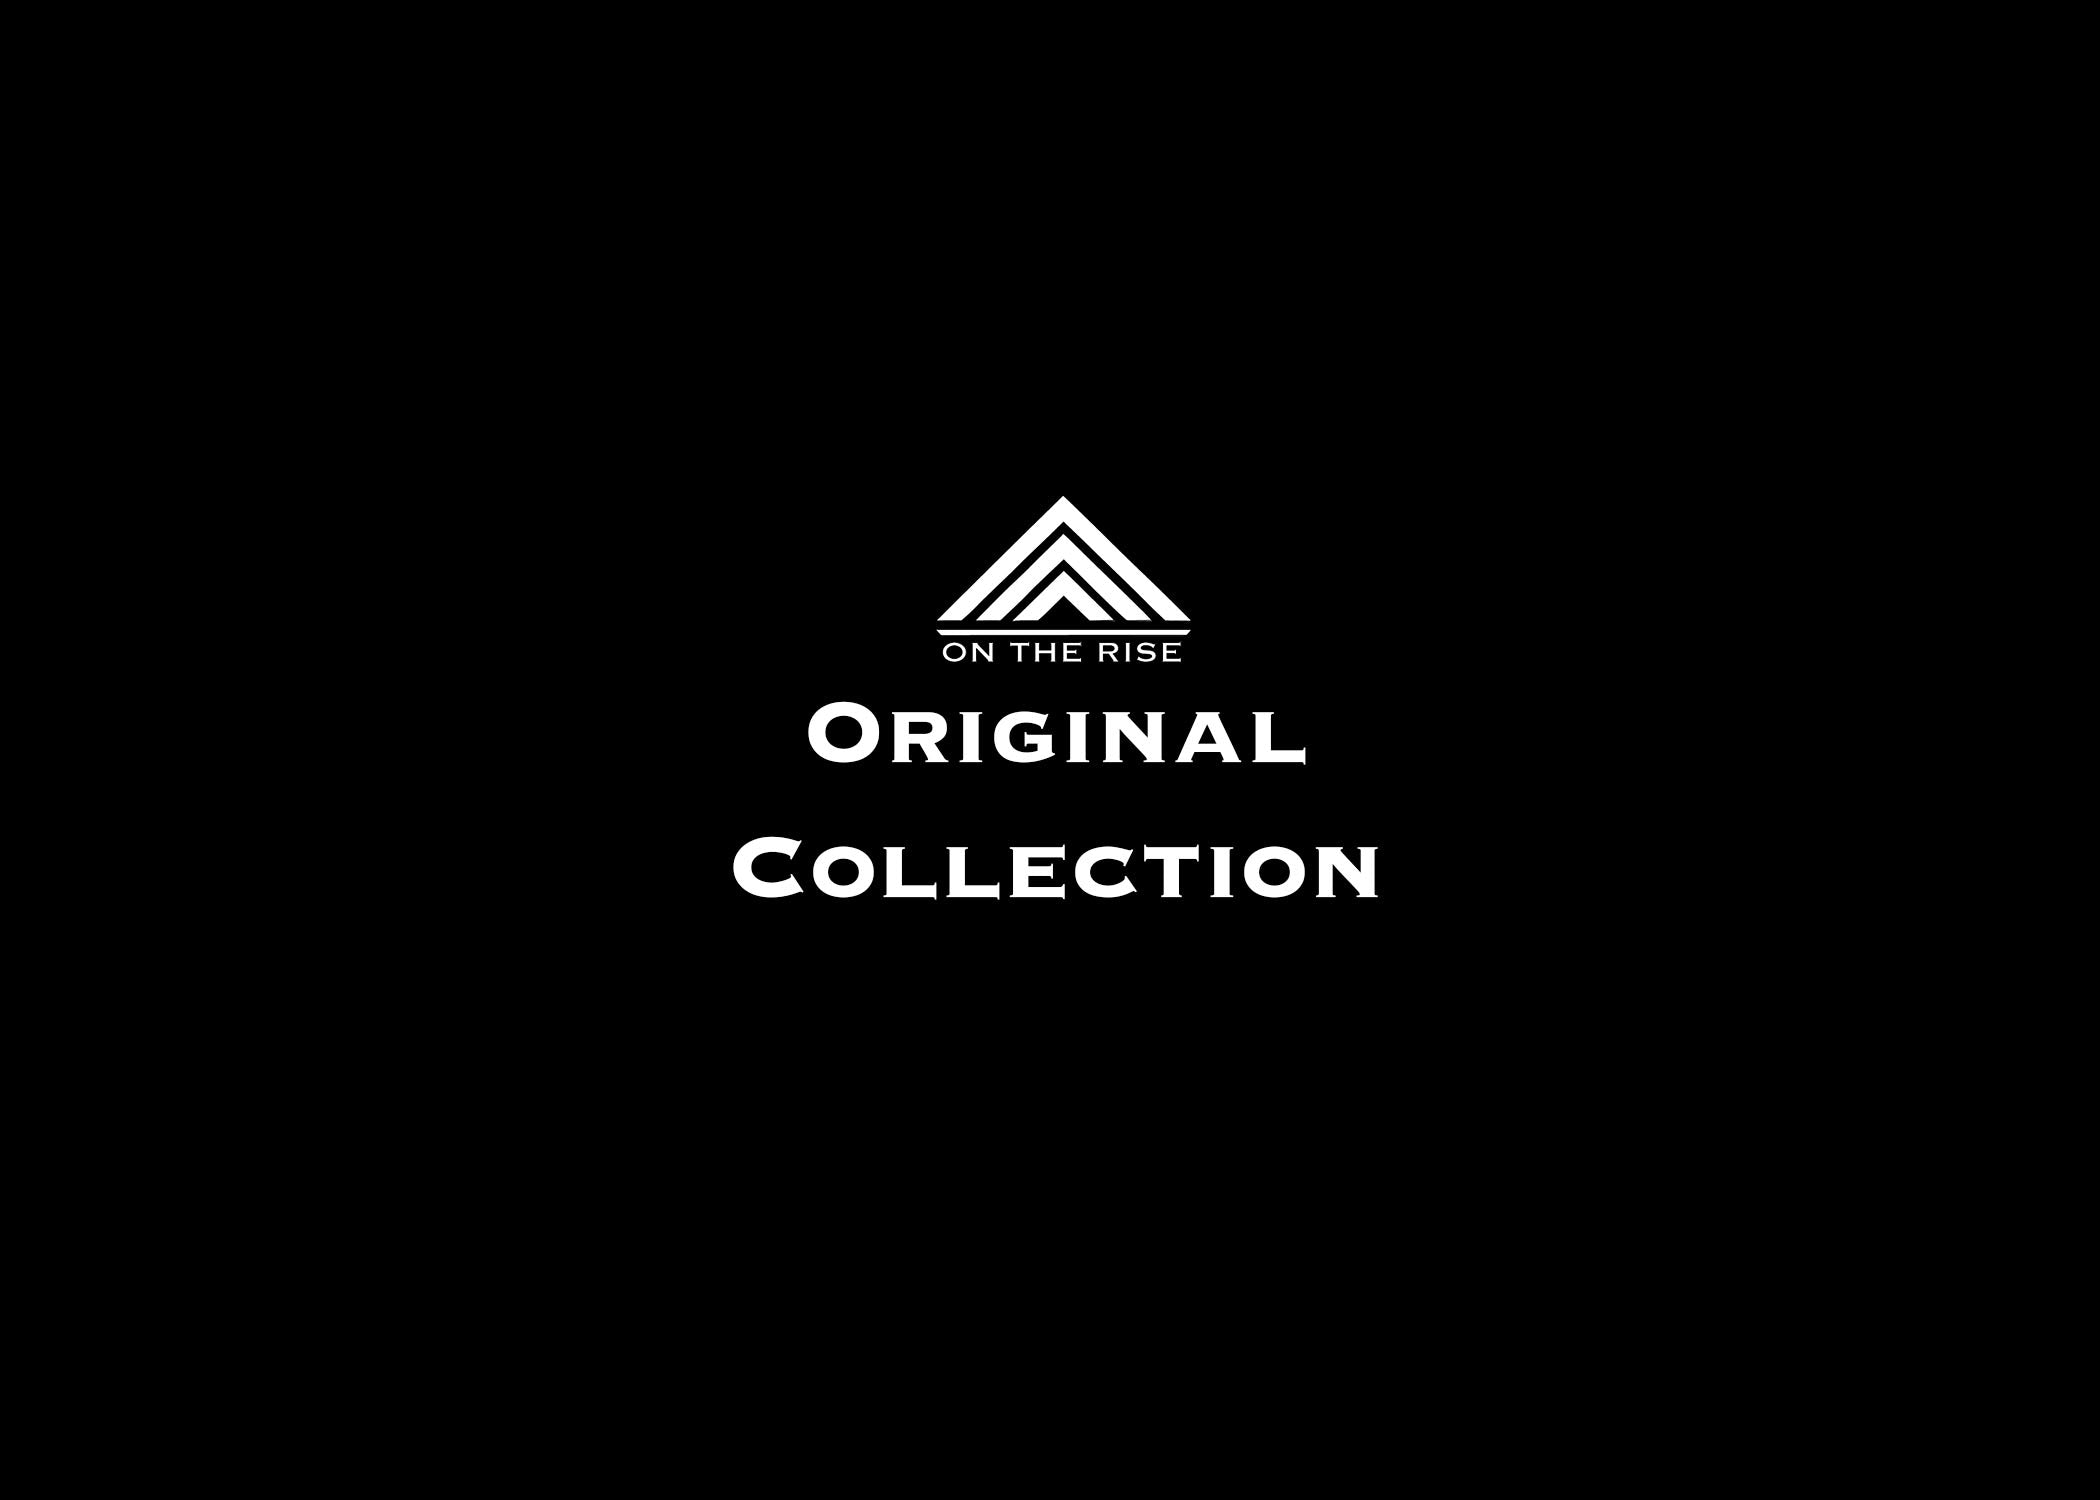 “ORIGINAL” Collection